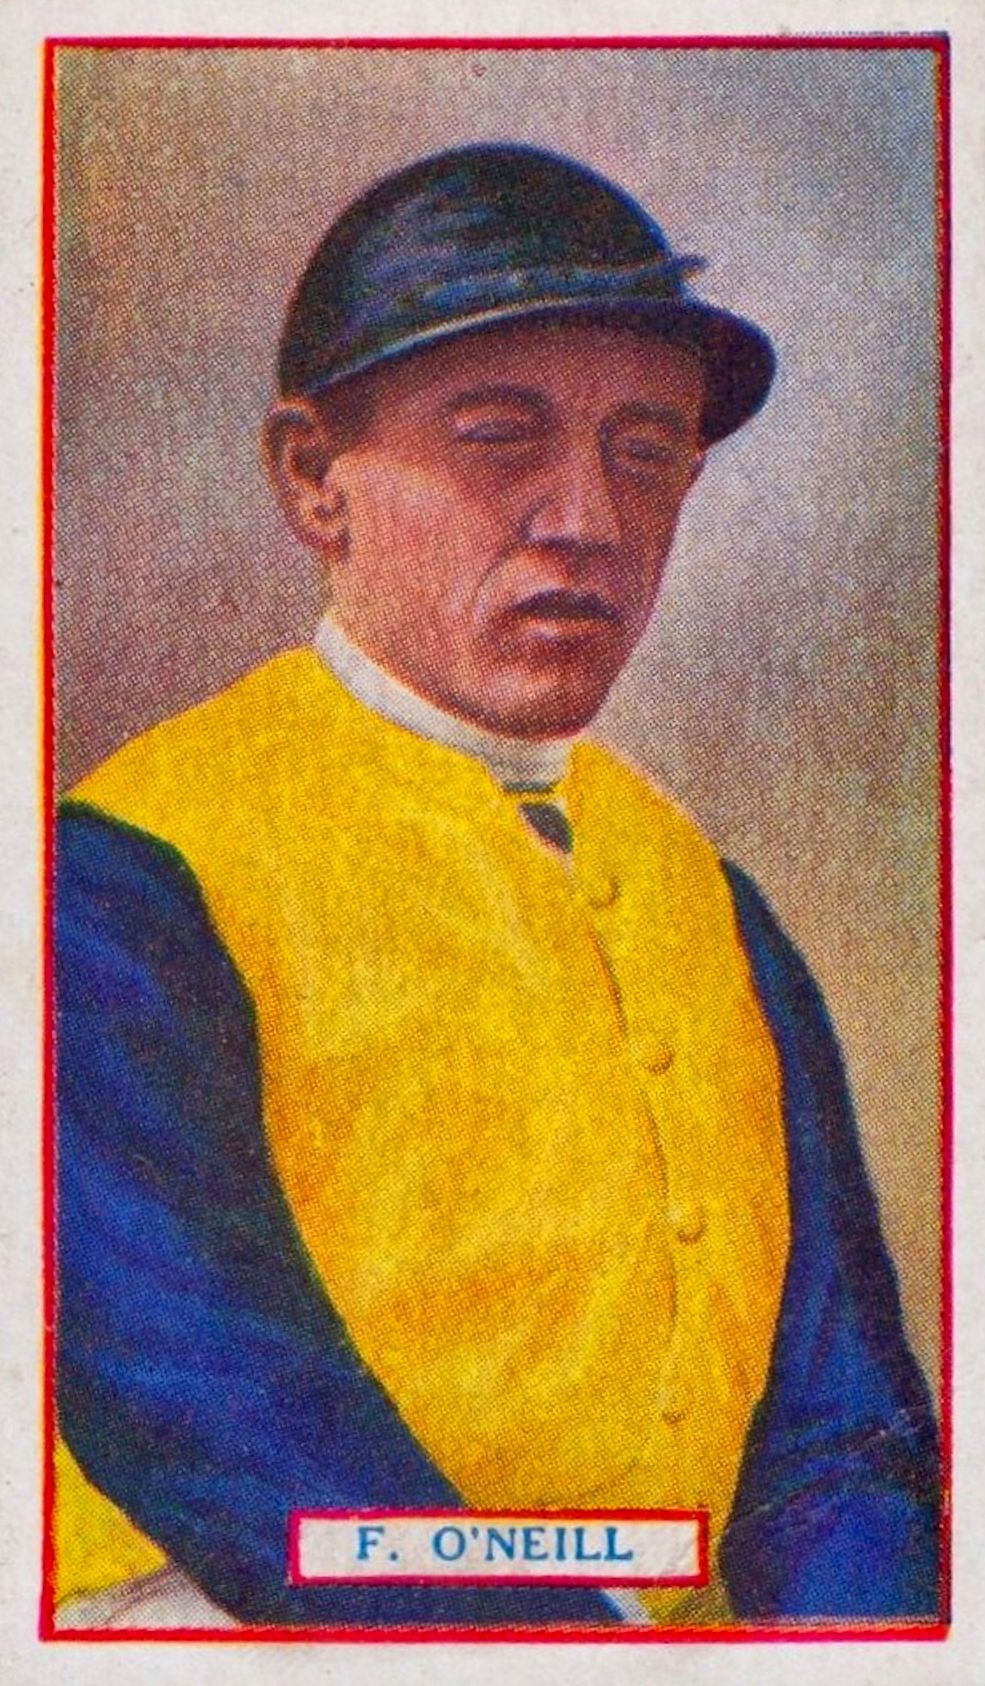 Frank O'Neill, 1923 Godfrey Phillips jockey card (Museum Collection)